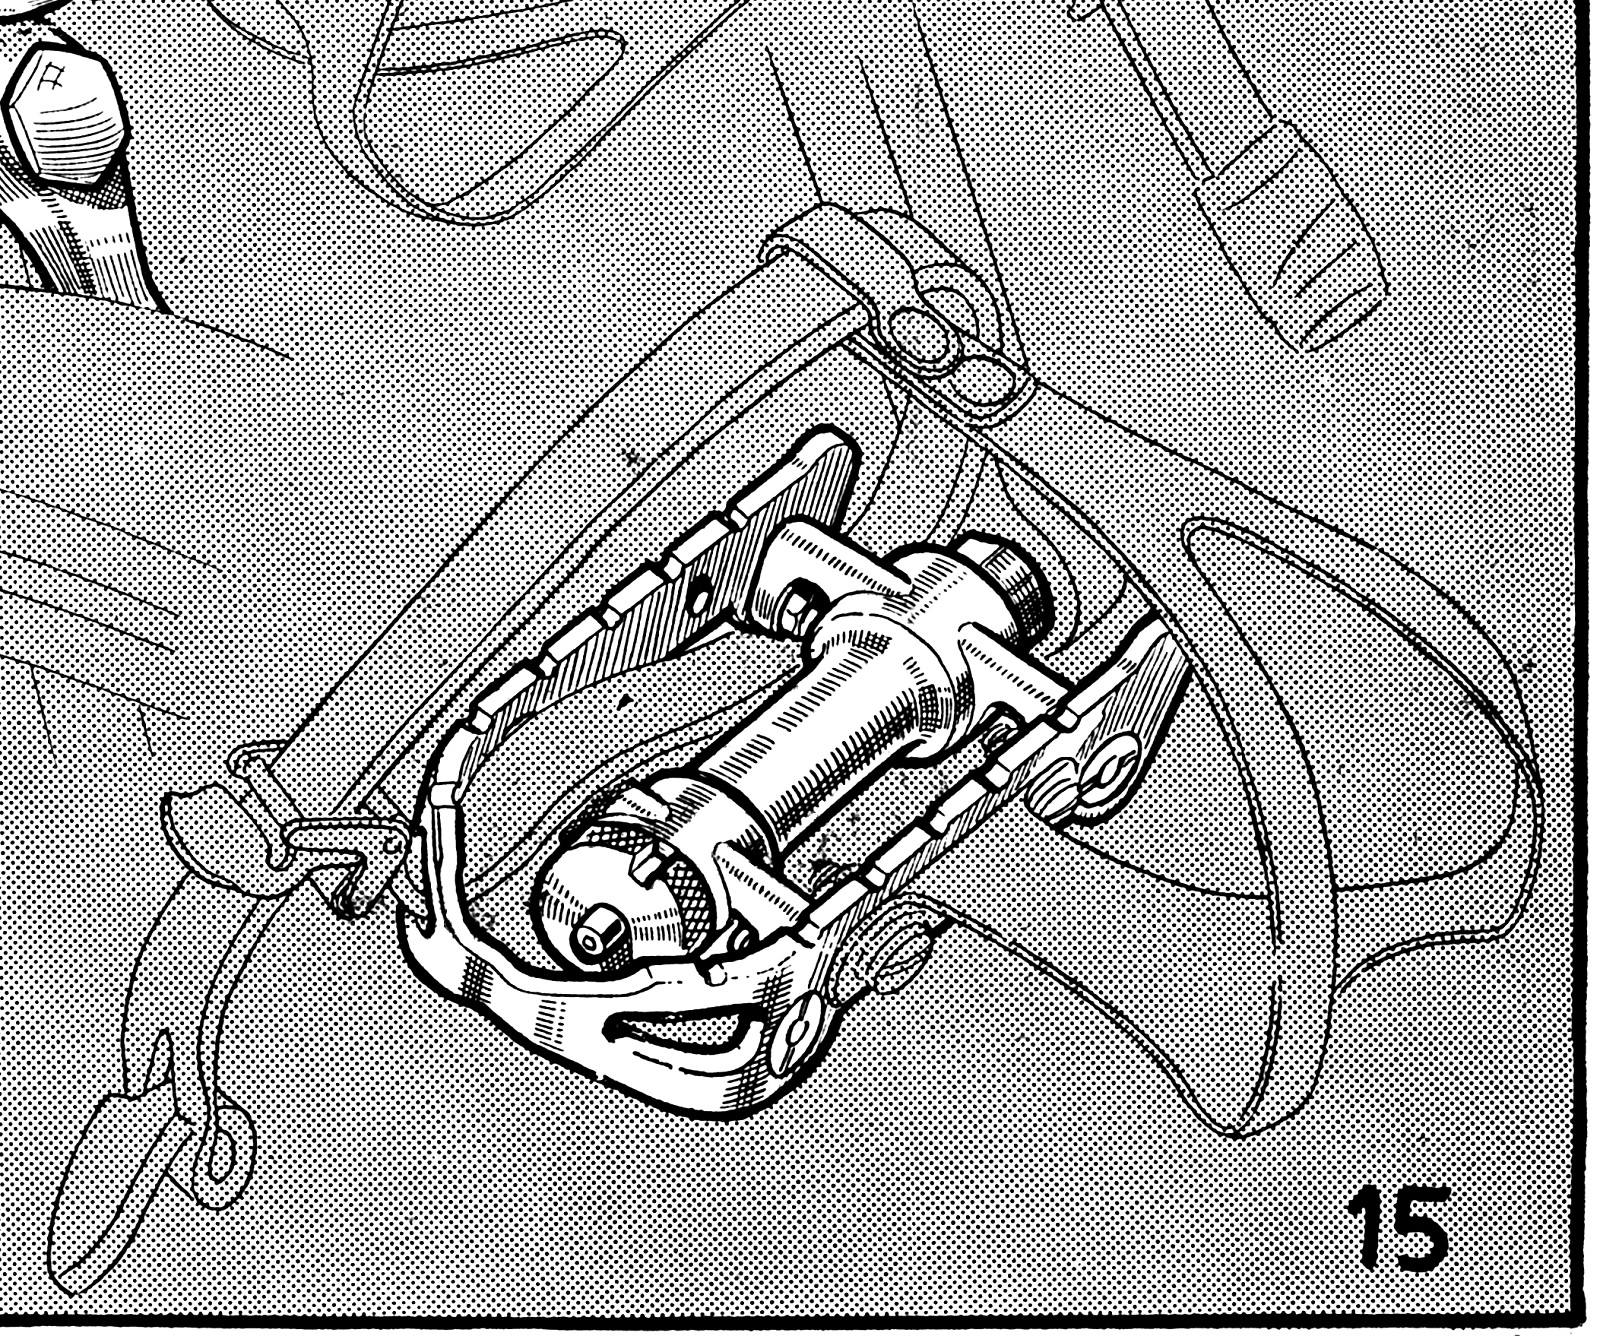 TA Pedal 1st gen Le Cycle 1953.jpg